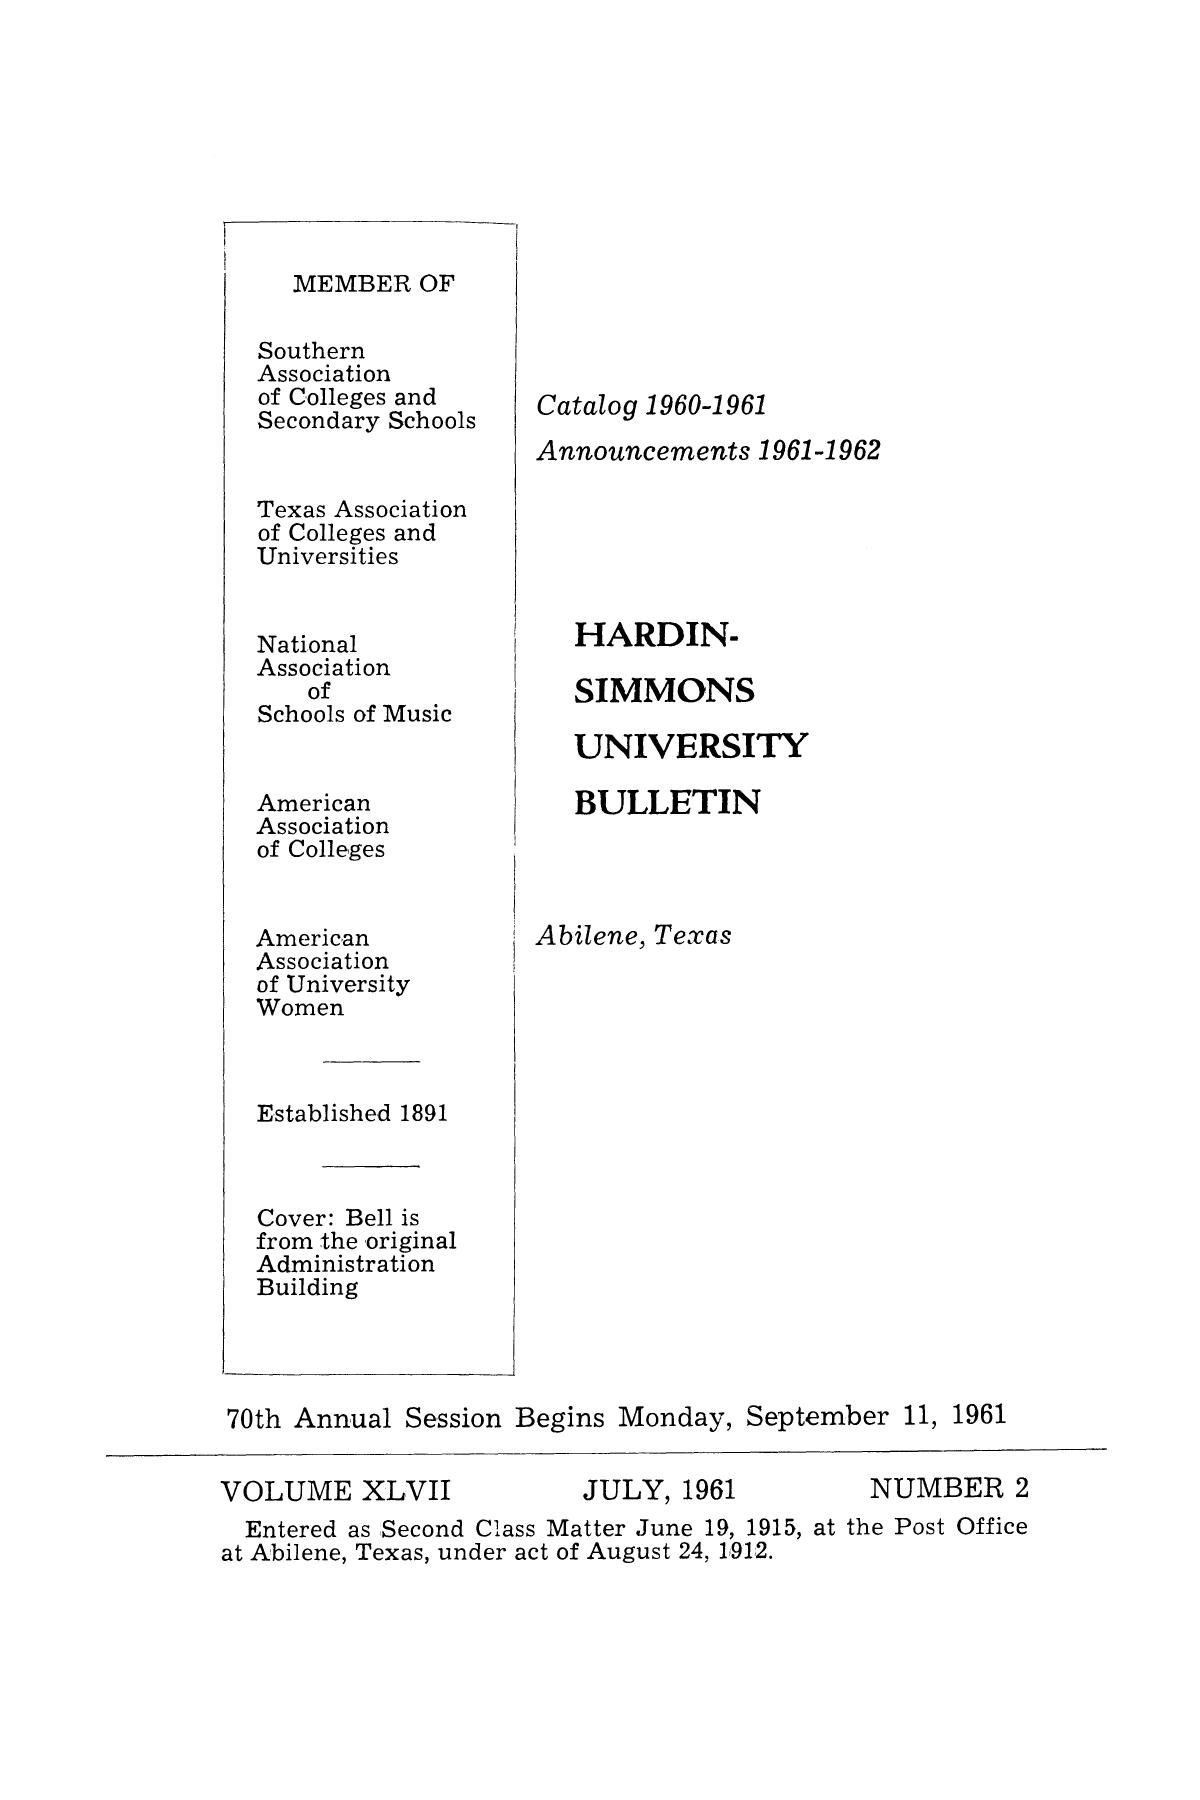 Catalog of Hardin-Simmons University, 1960-1961
                                                
                                                    1
                                                